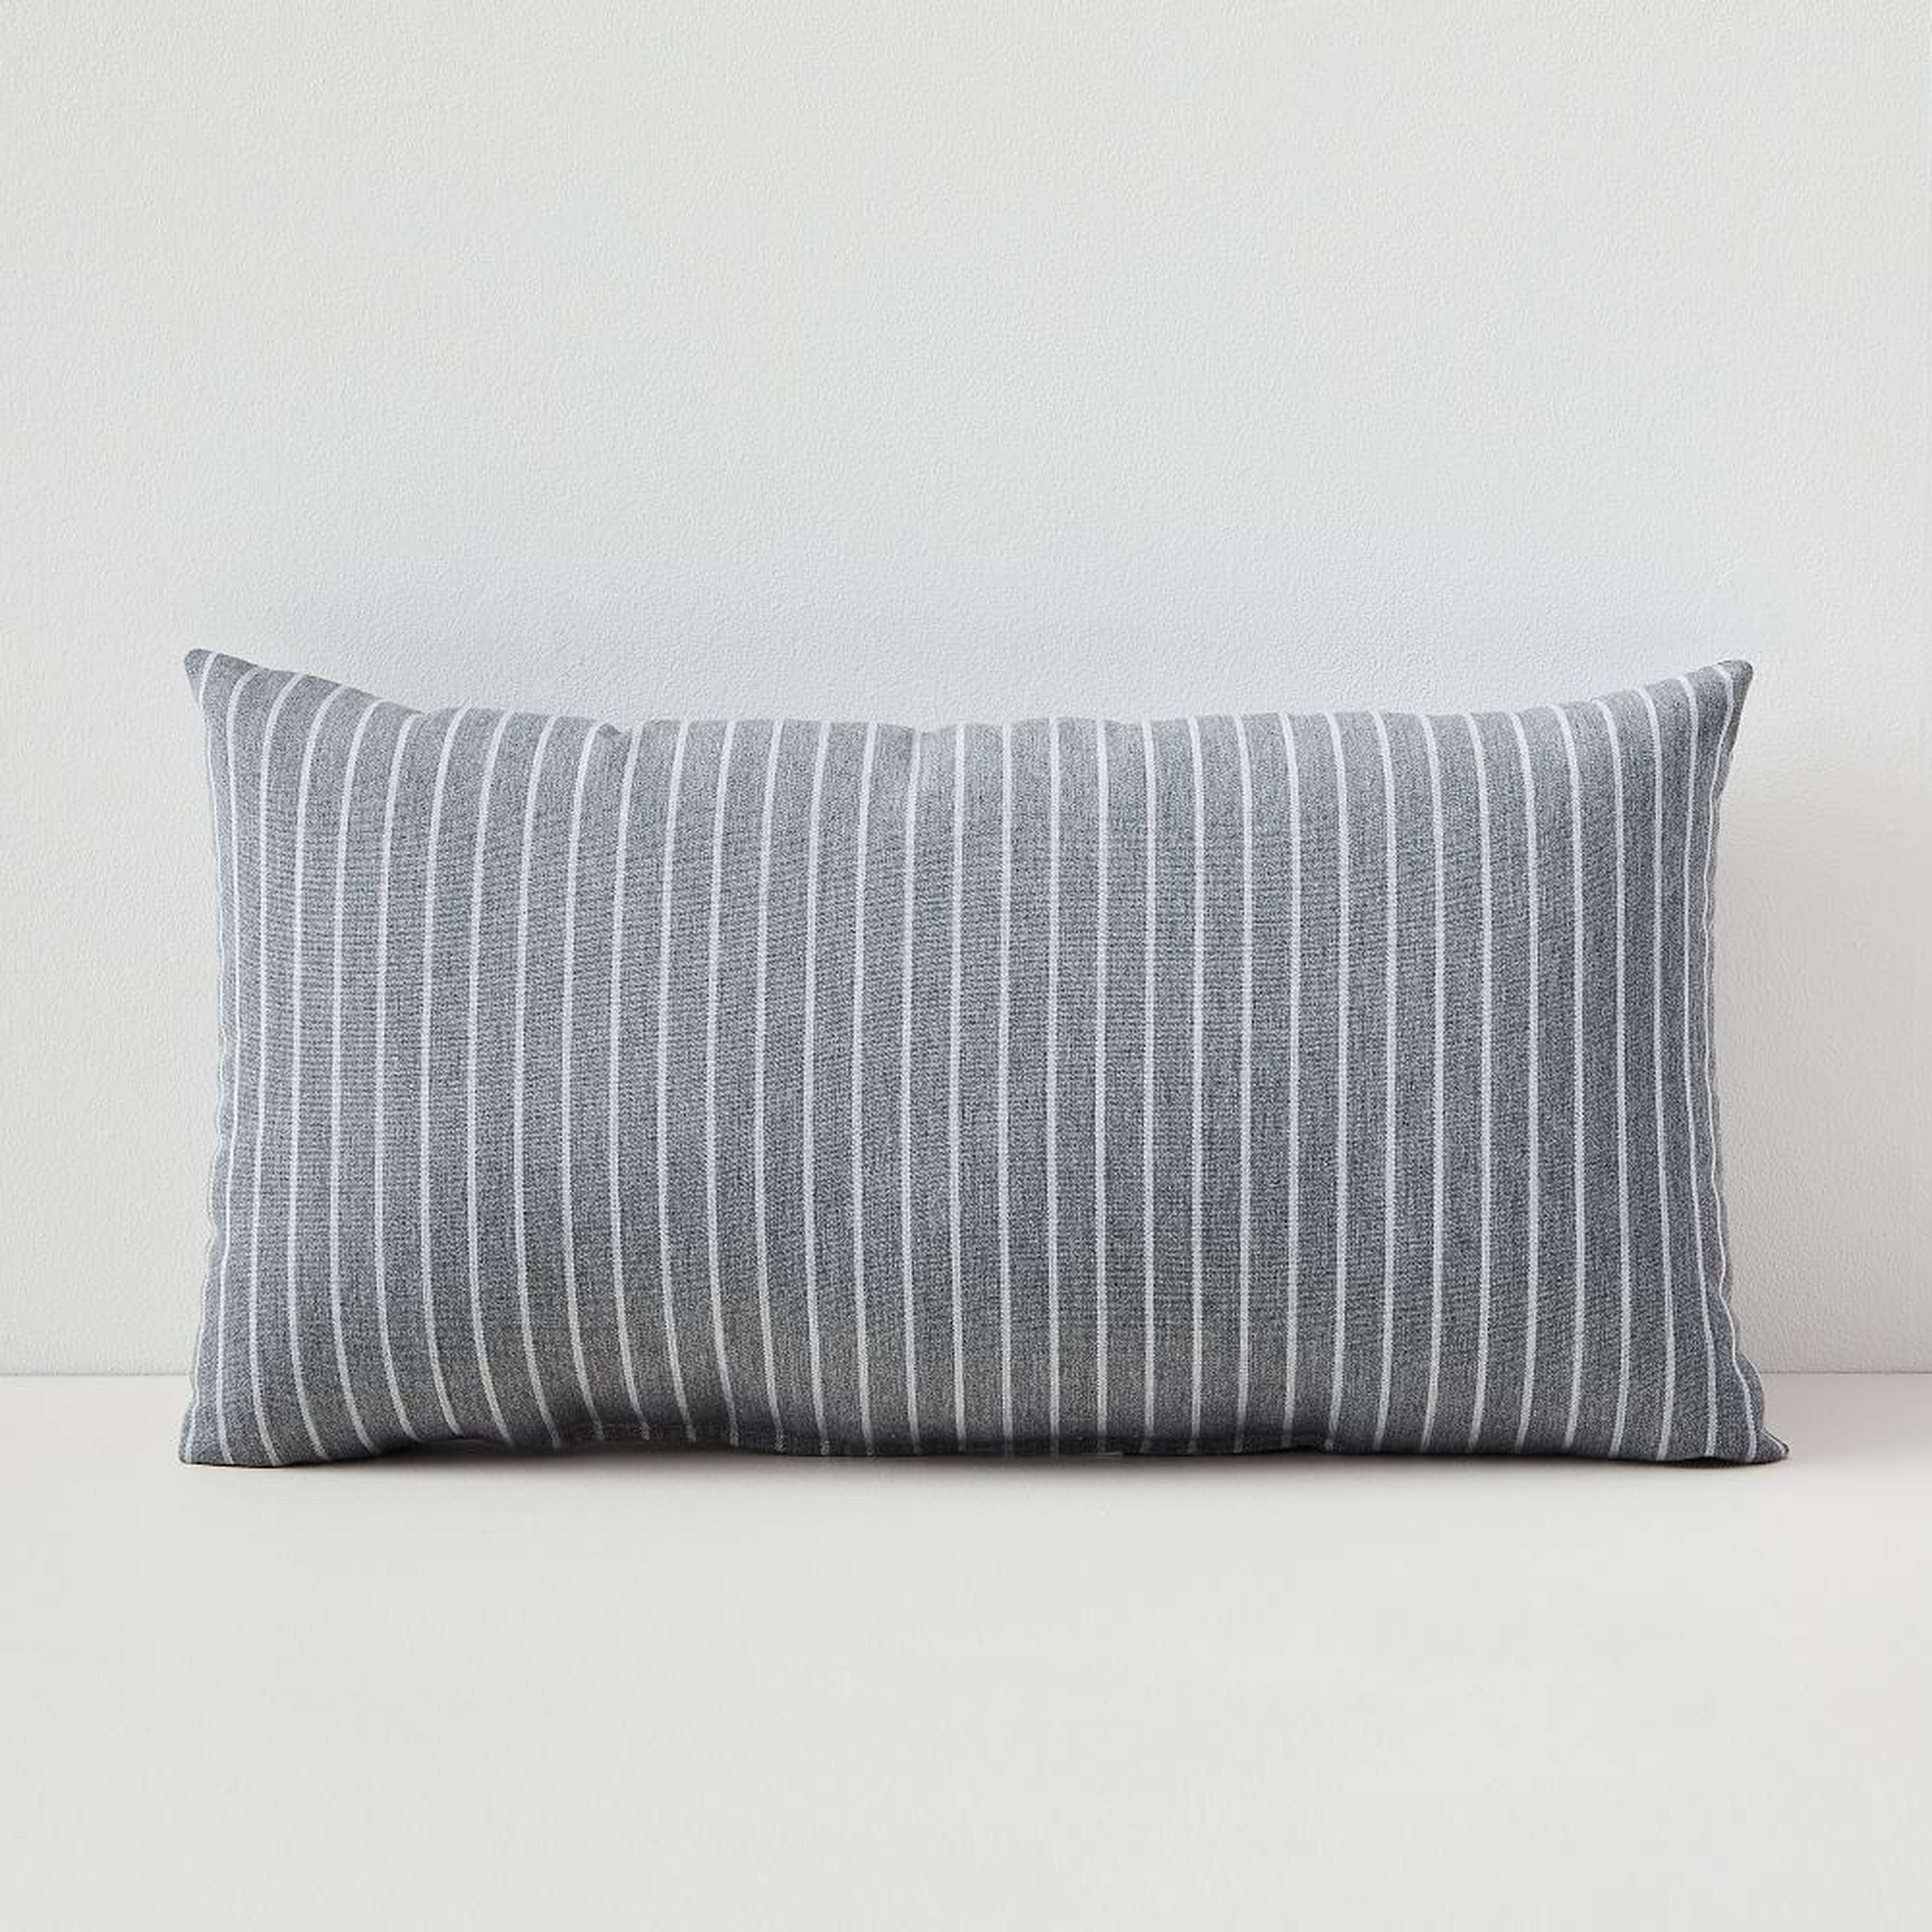 Sunbrella Indoor/Outdoor Striped Lumbar Pillow, Smoke, 12"x21", Set of 2 - West Elm